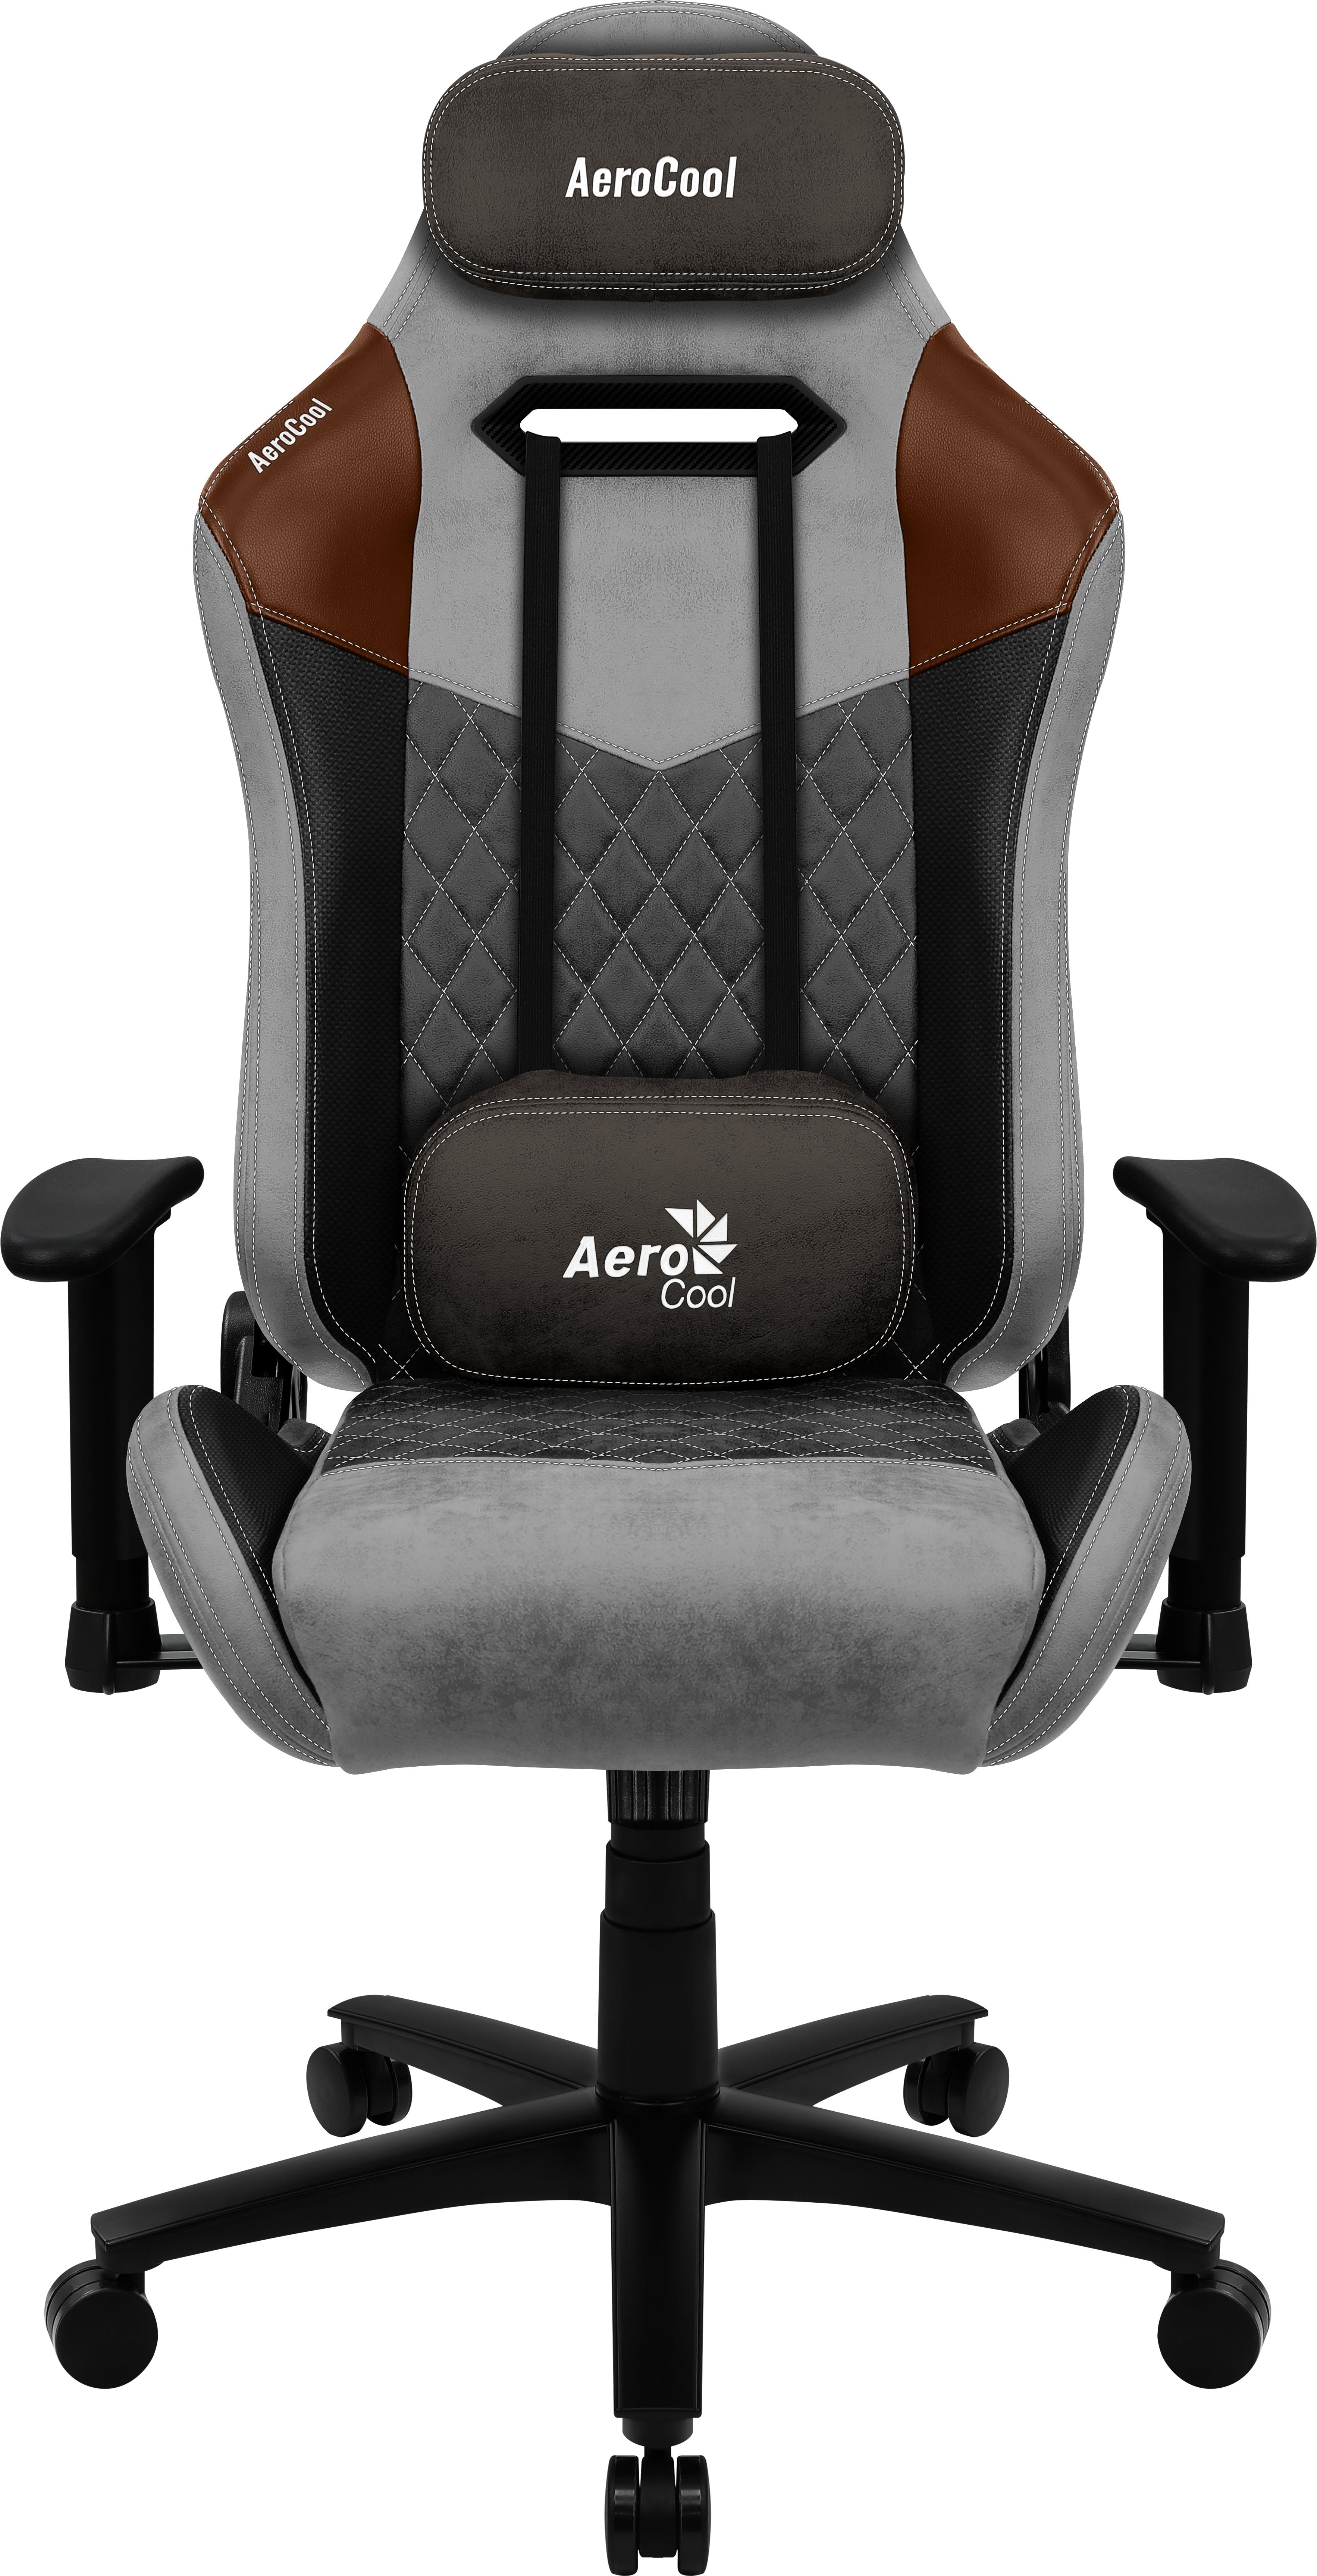  Aerocool  DUKE  AeroSuede Universal gaming  chair  Black 